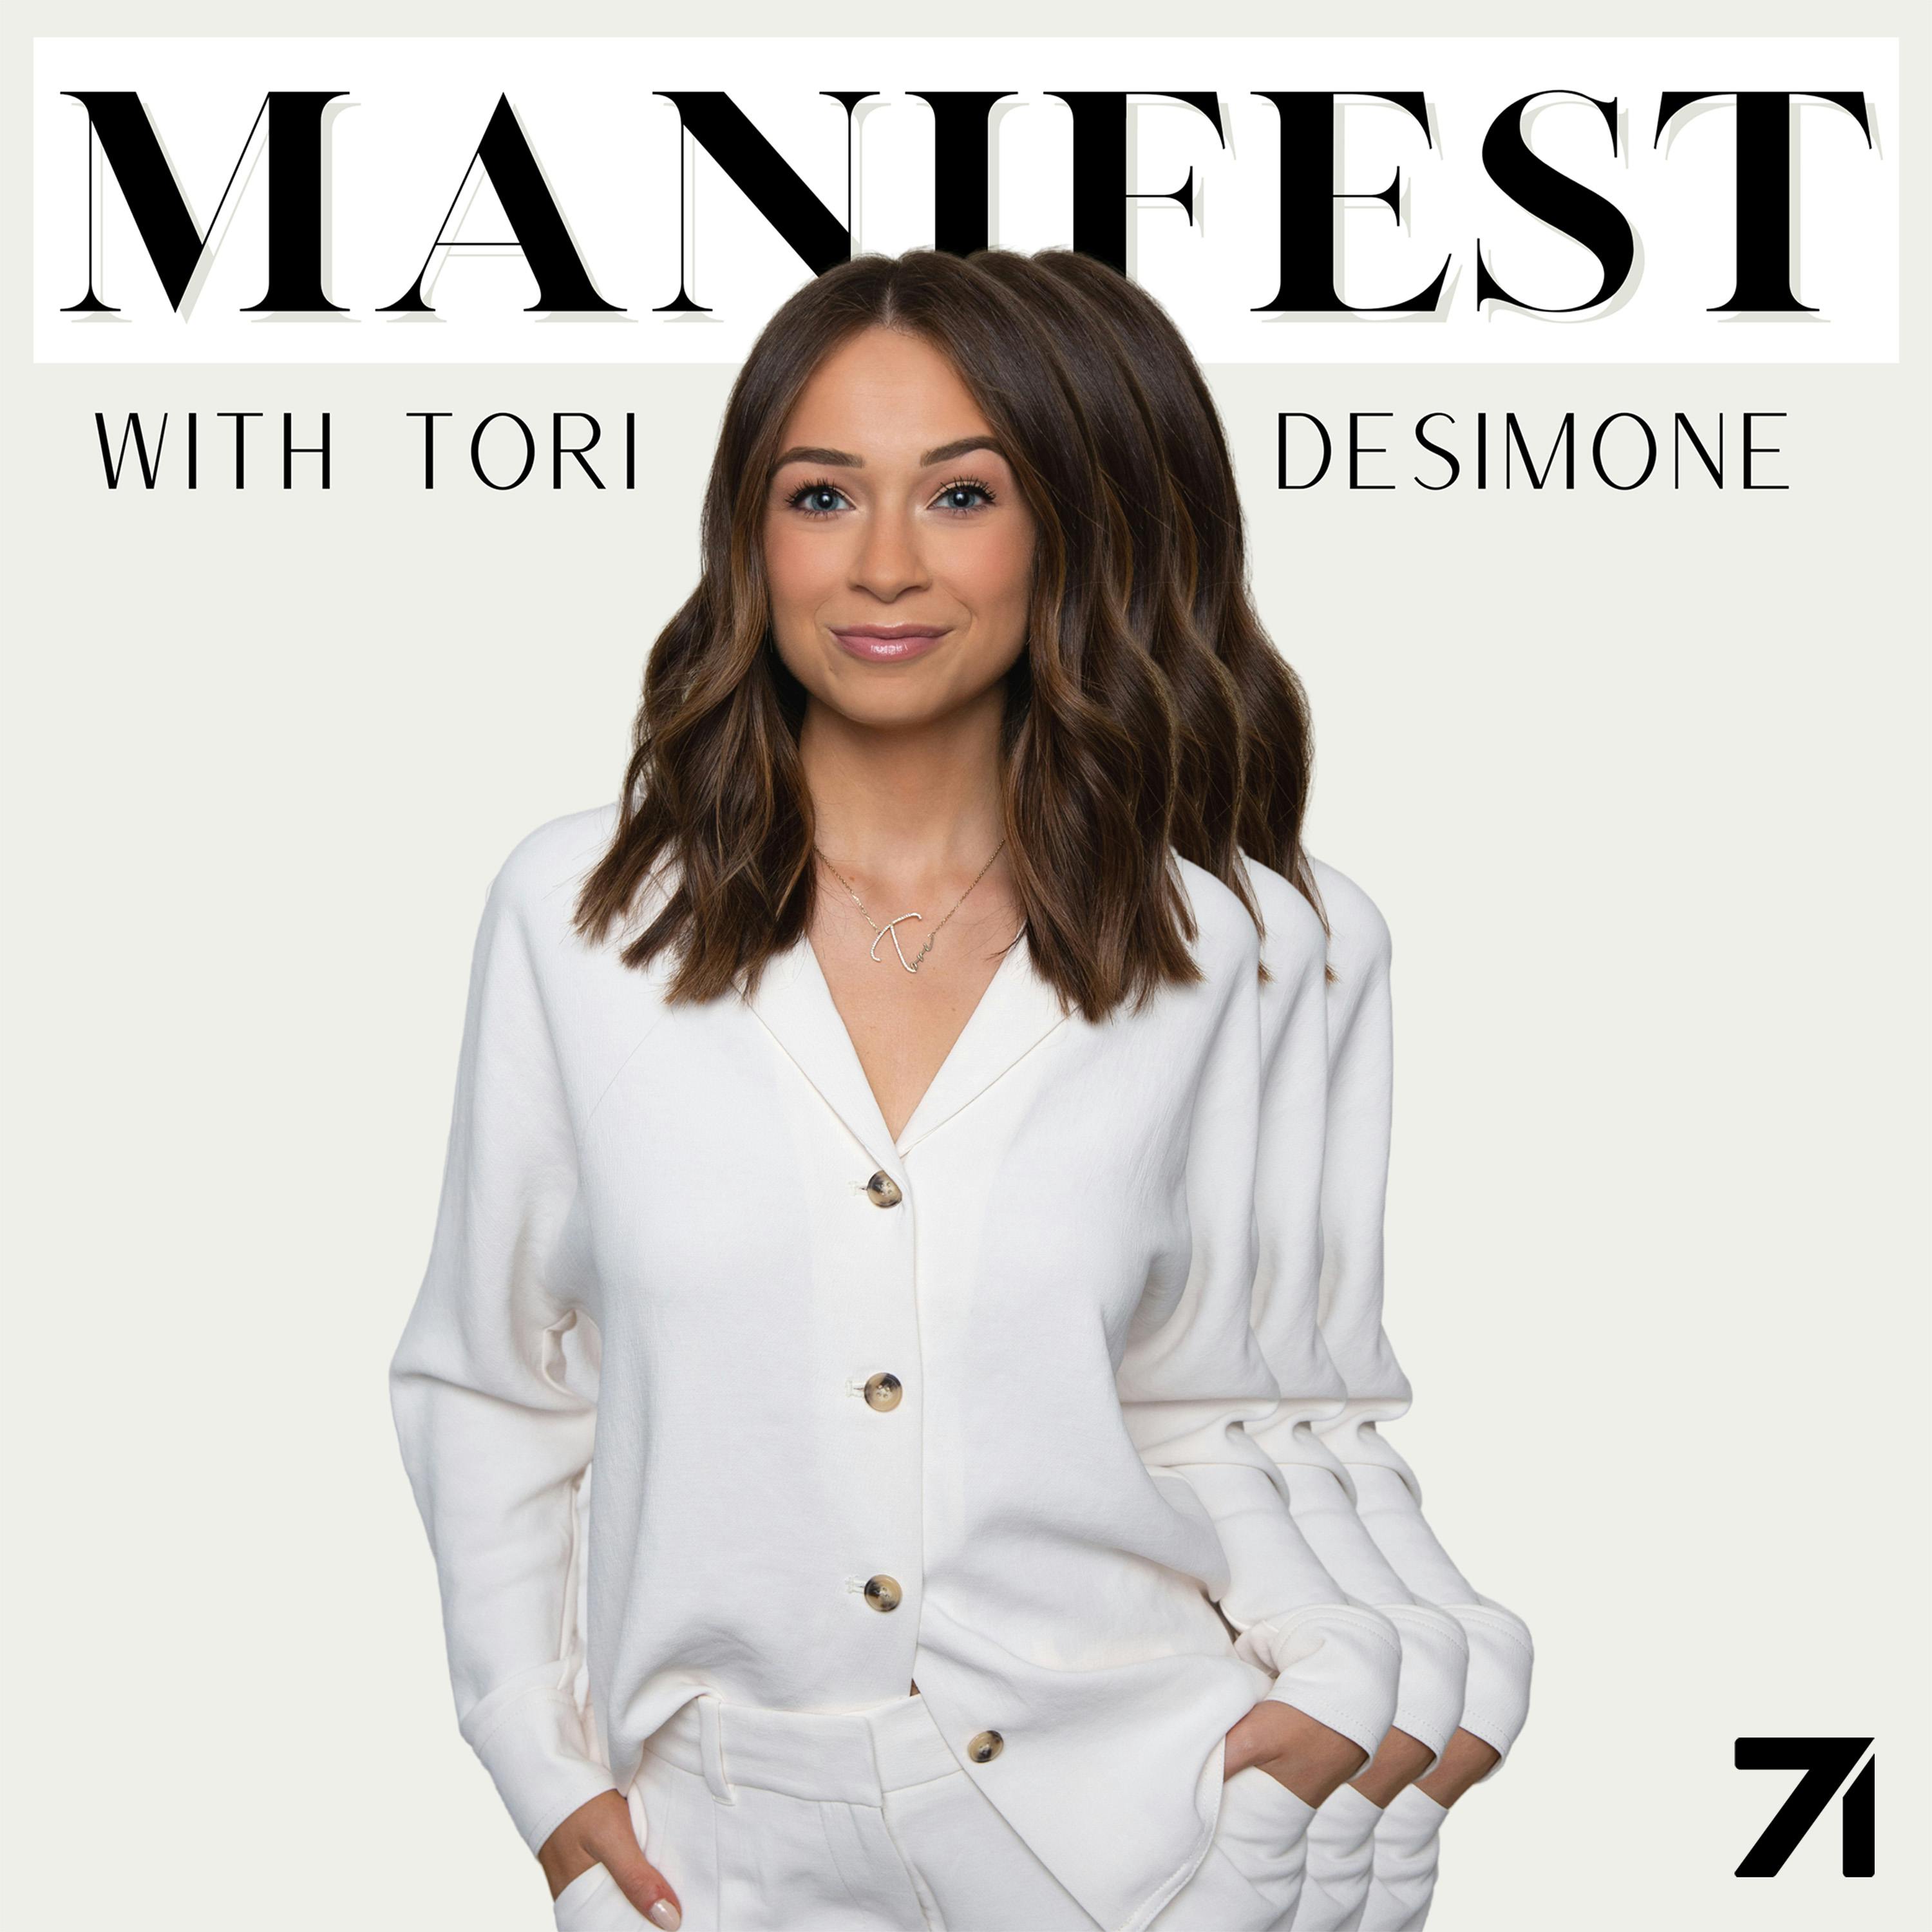 Manifest with Tori DeSimone